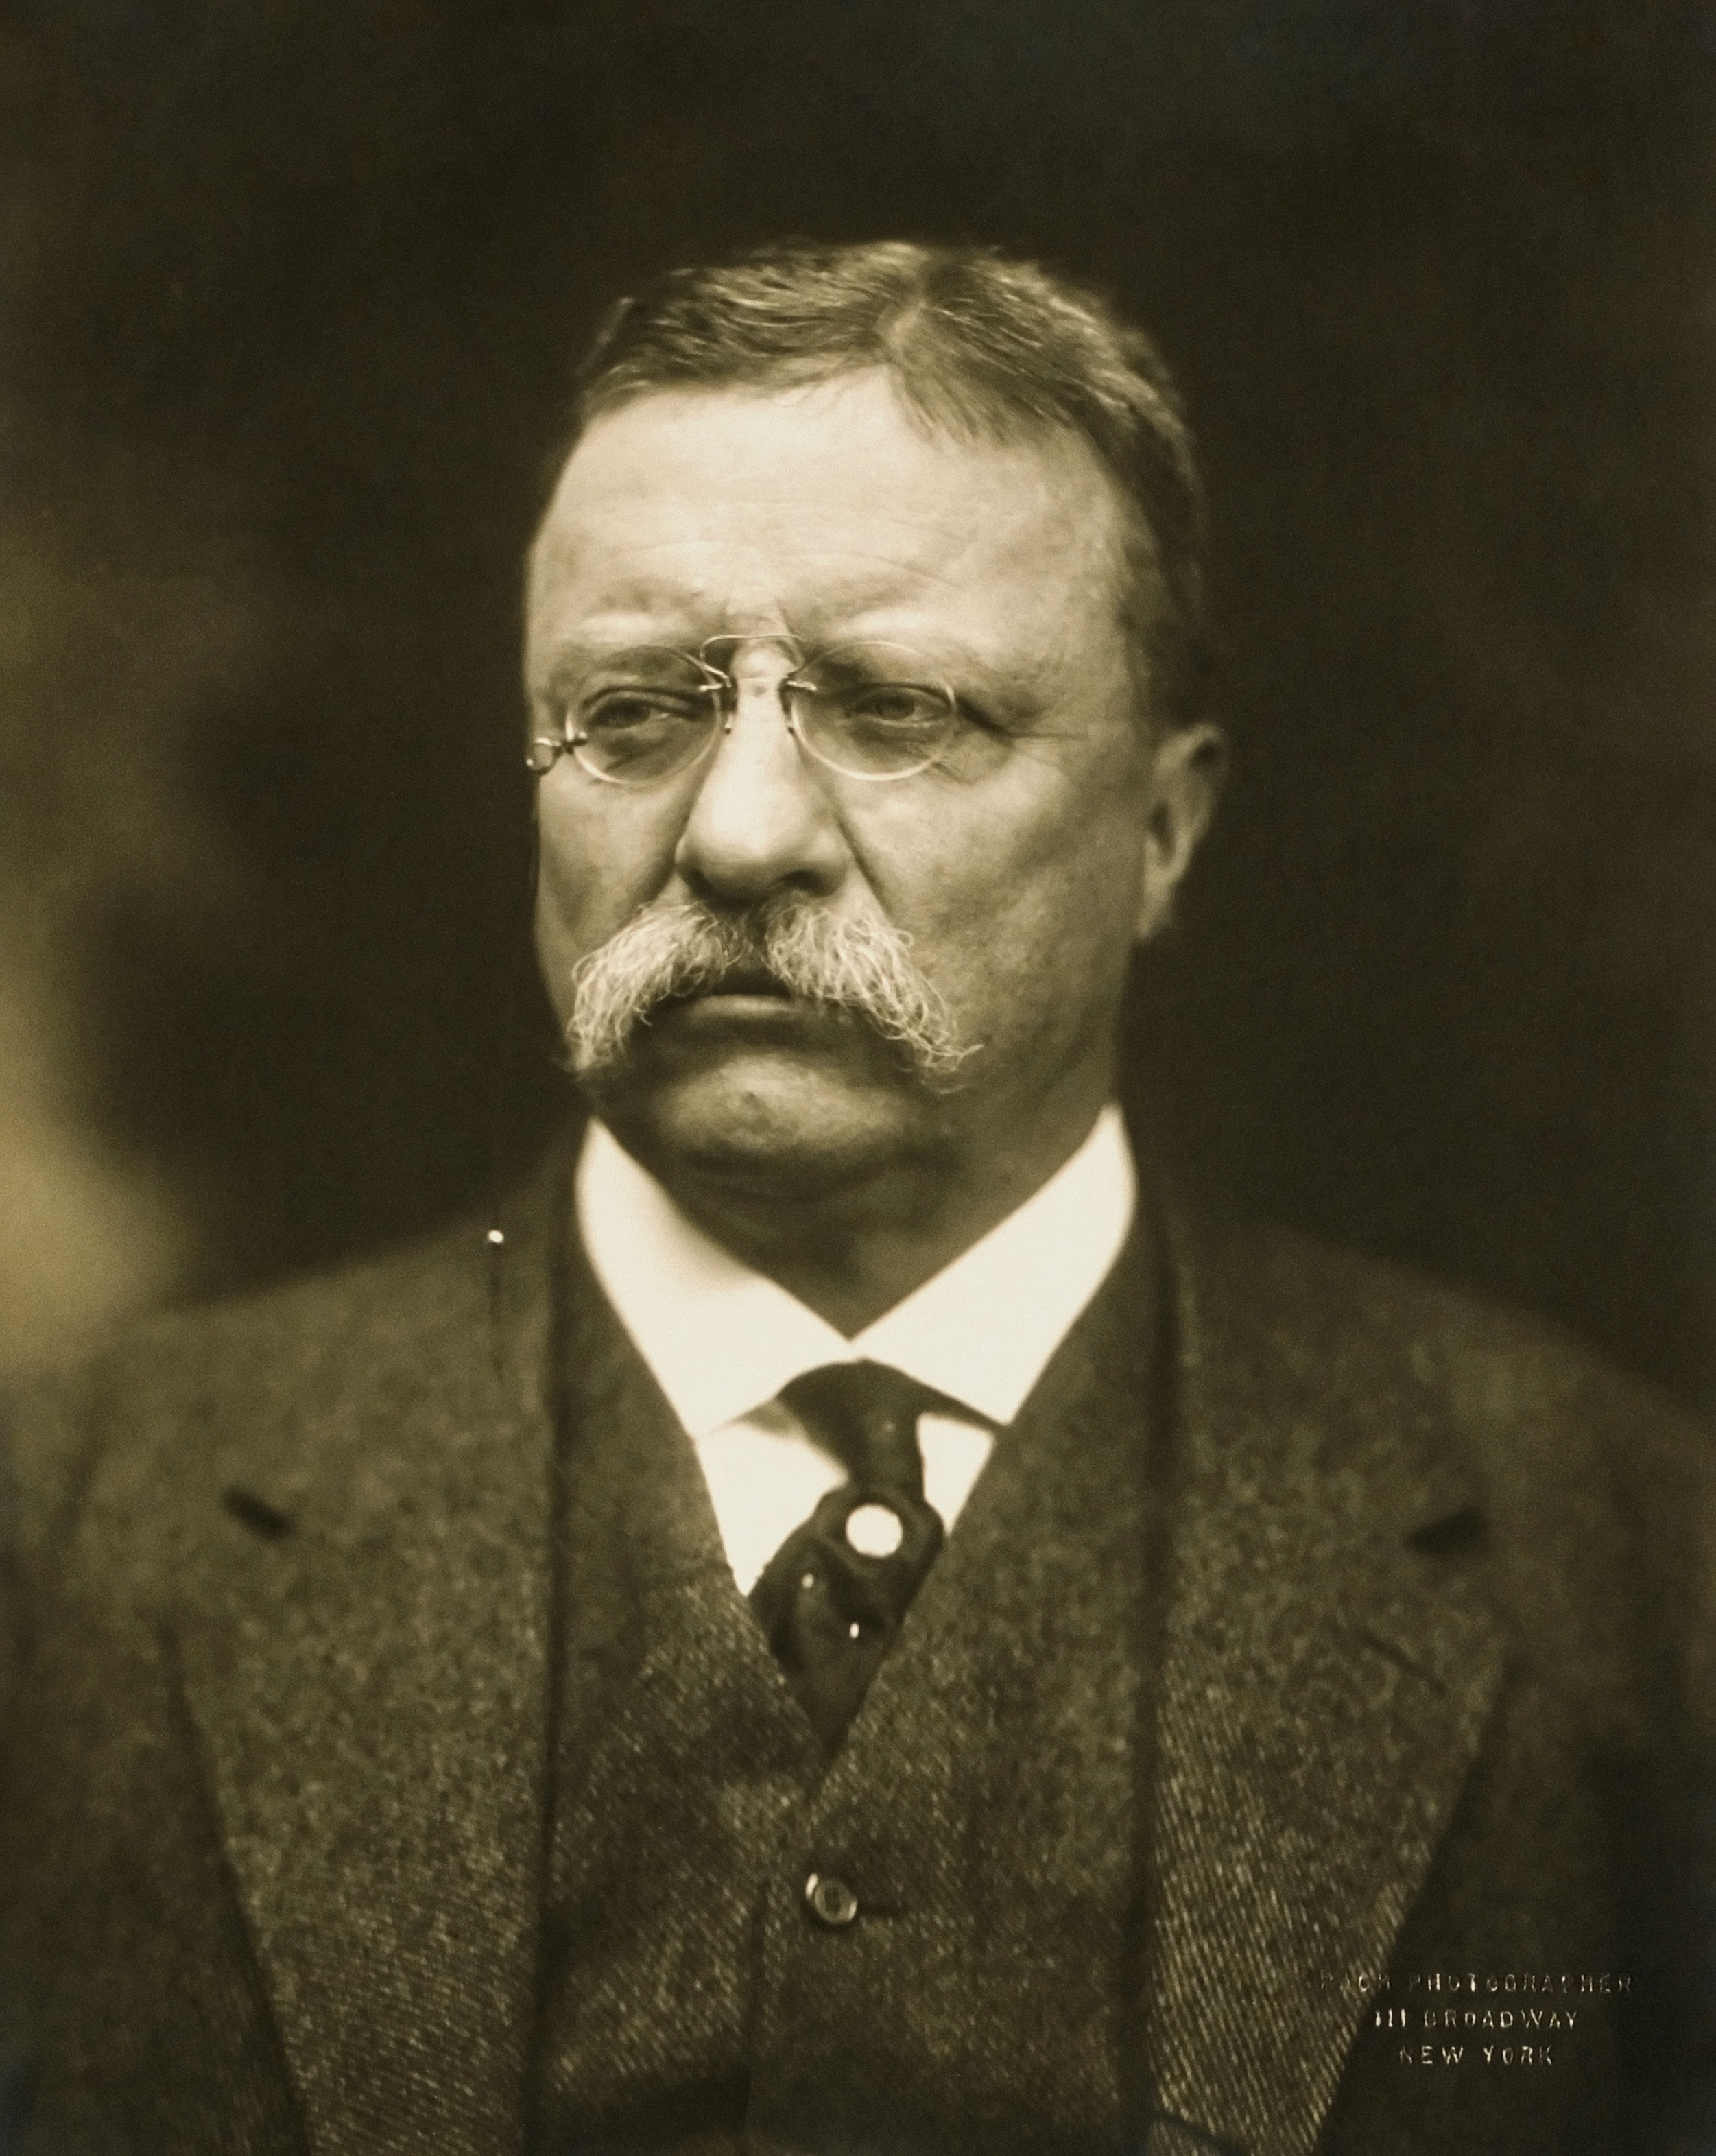 https://upload.wikimedia.org/wikipedia/commons/e/eb/T_Roosevelt.jpg